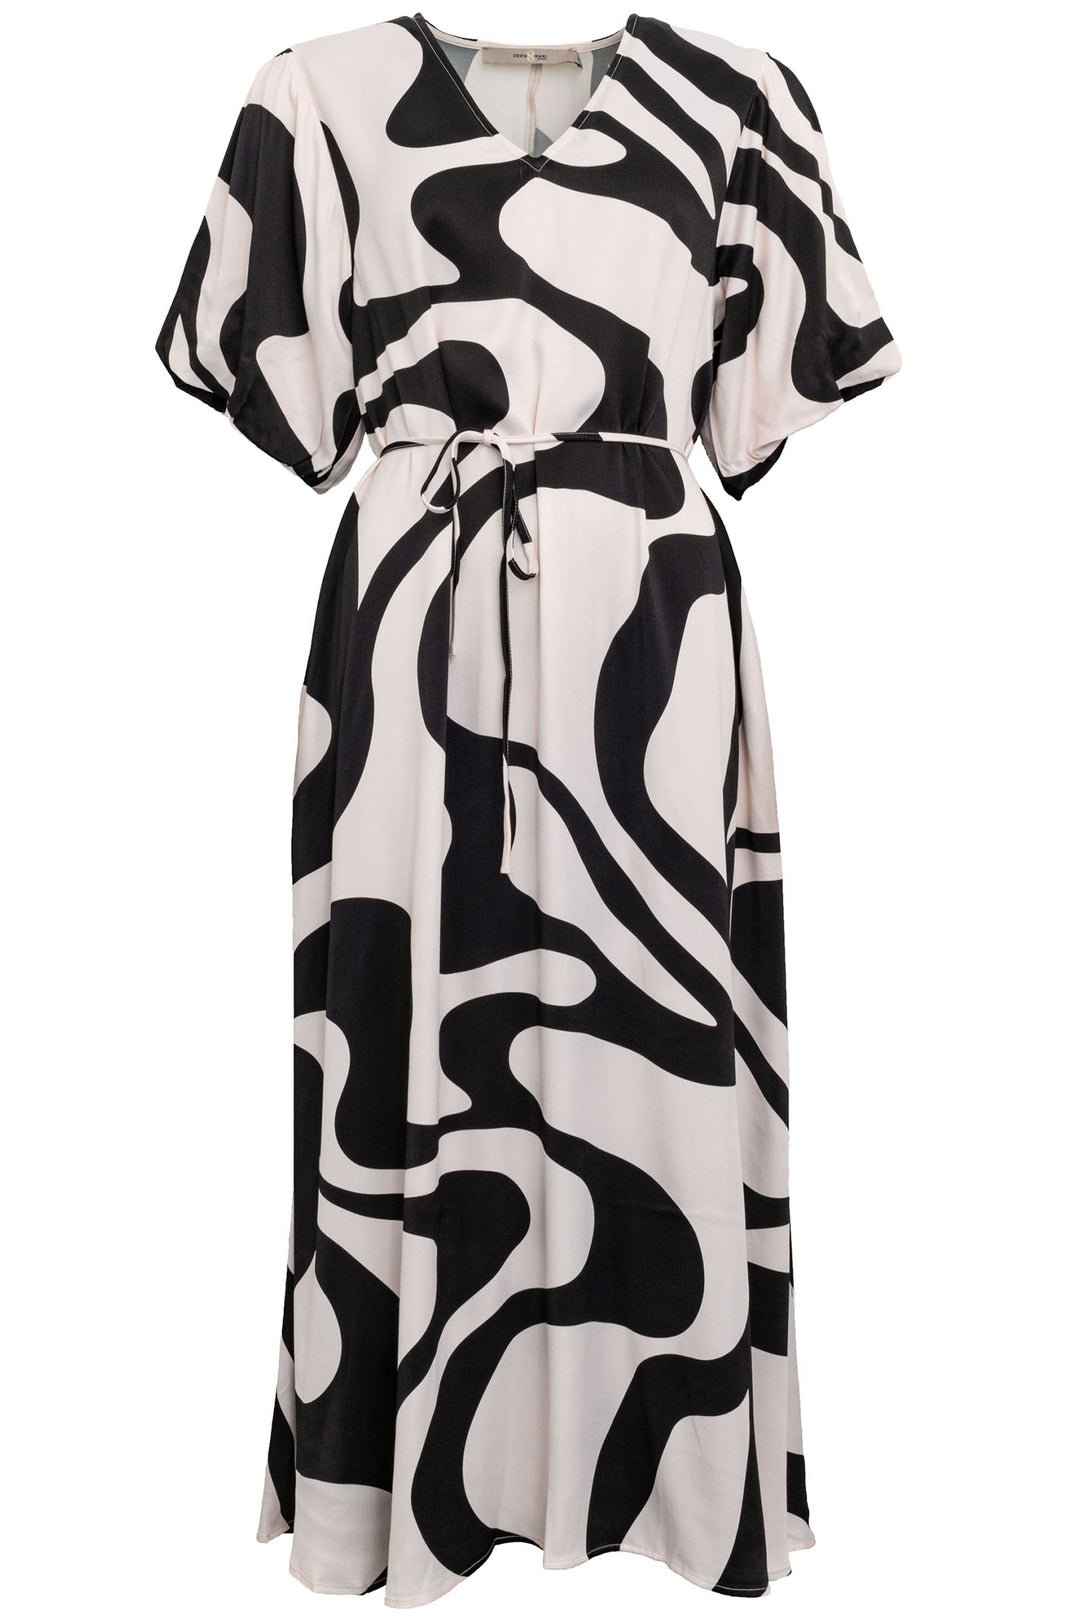 Costa Mani 2401305 Black White Monochrome Wave Nora Dress - Experience Boutique